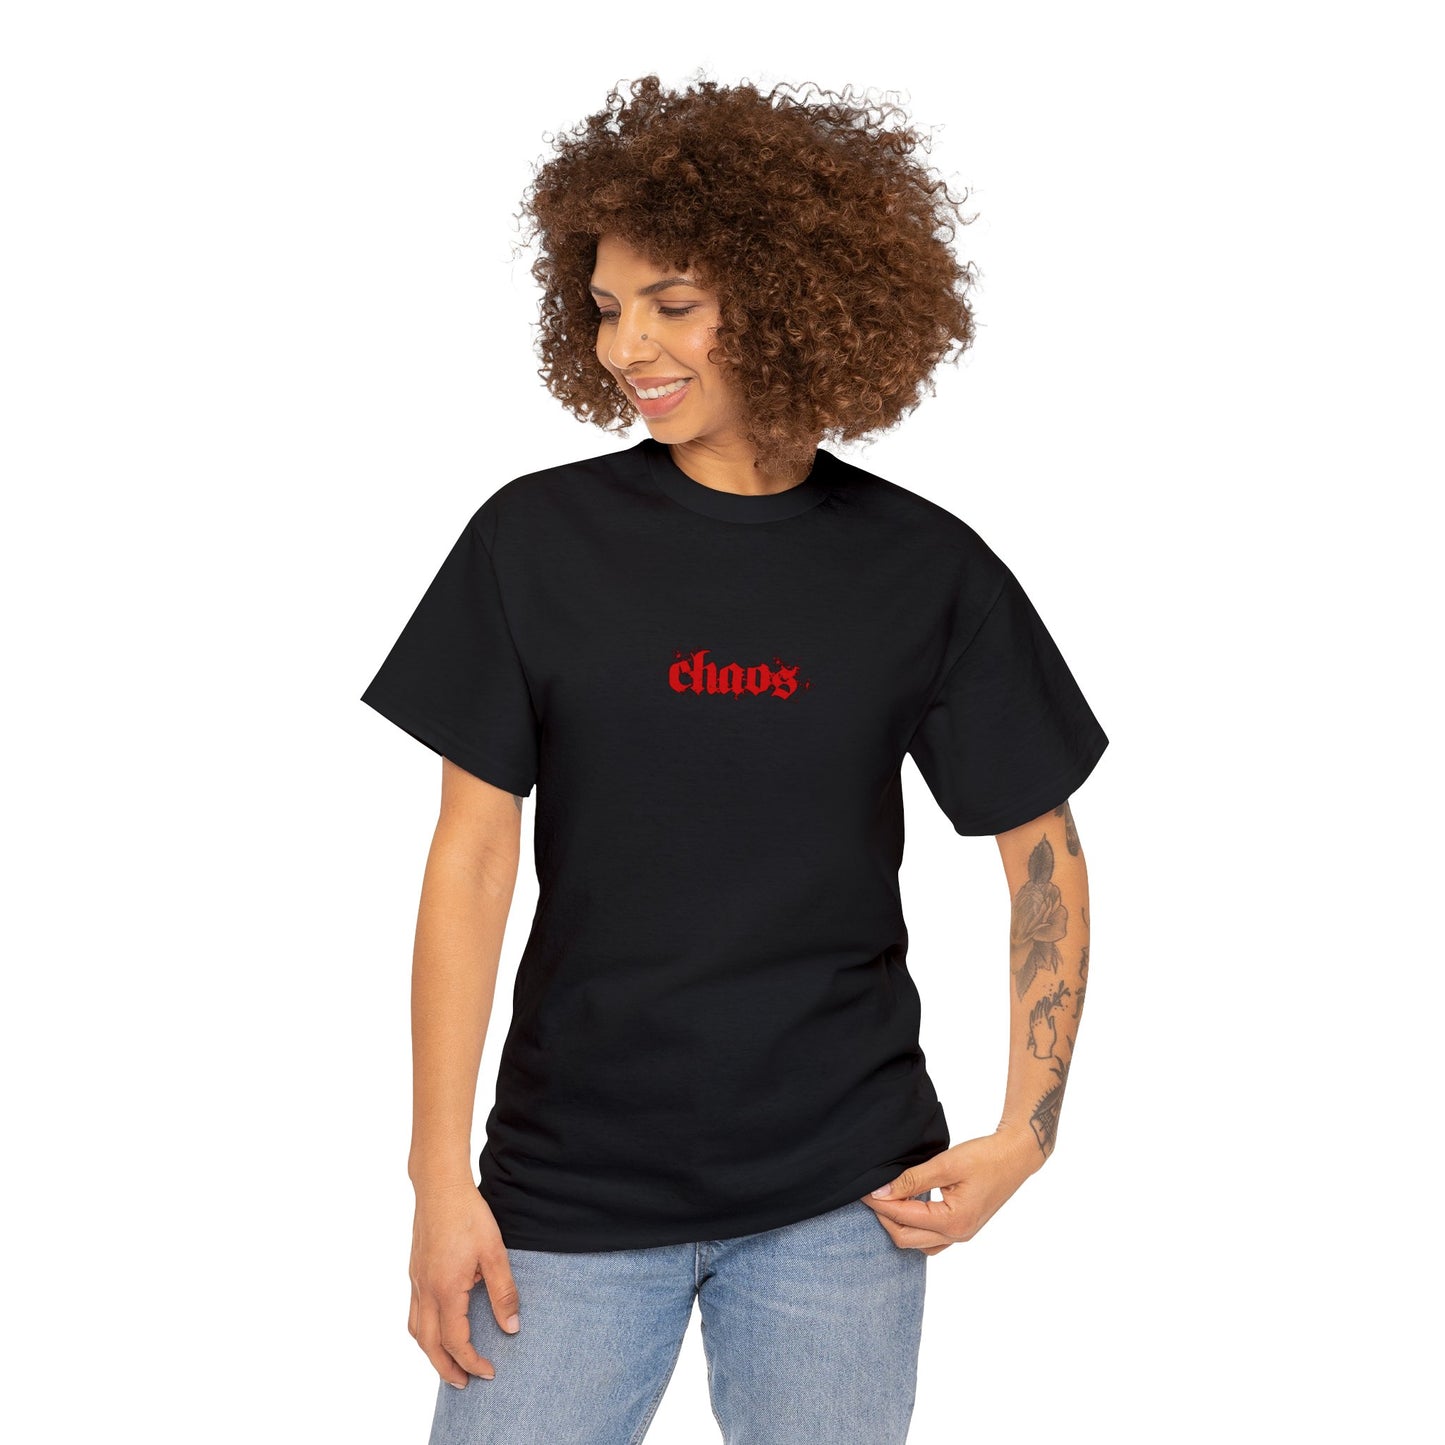 *Chaos T-Shirt*